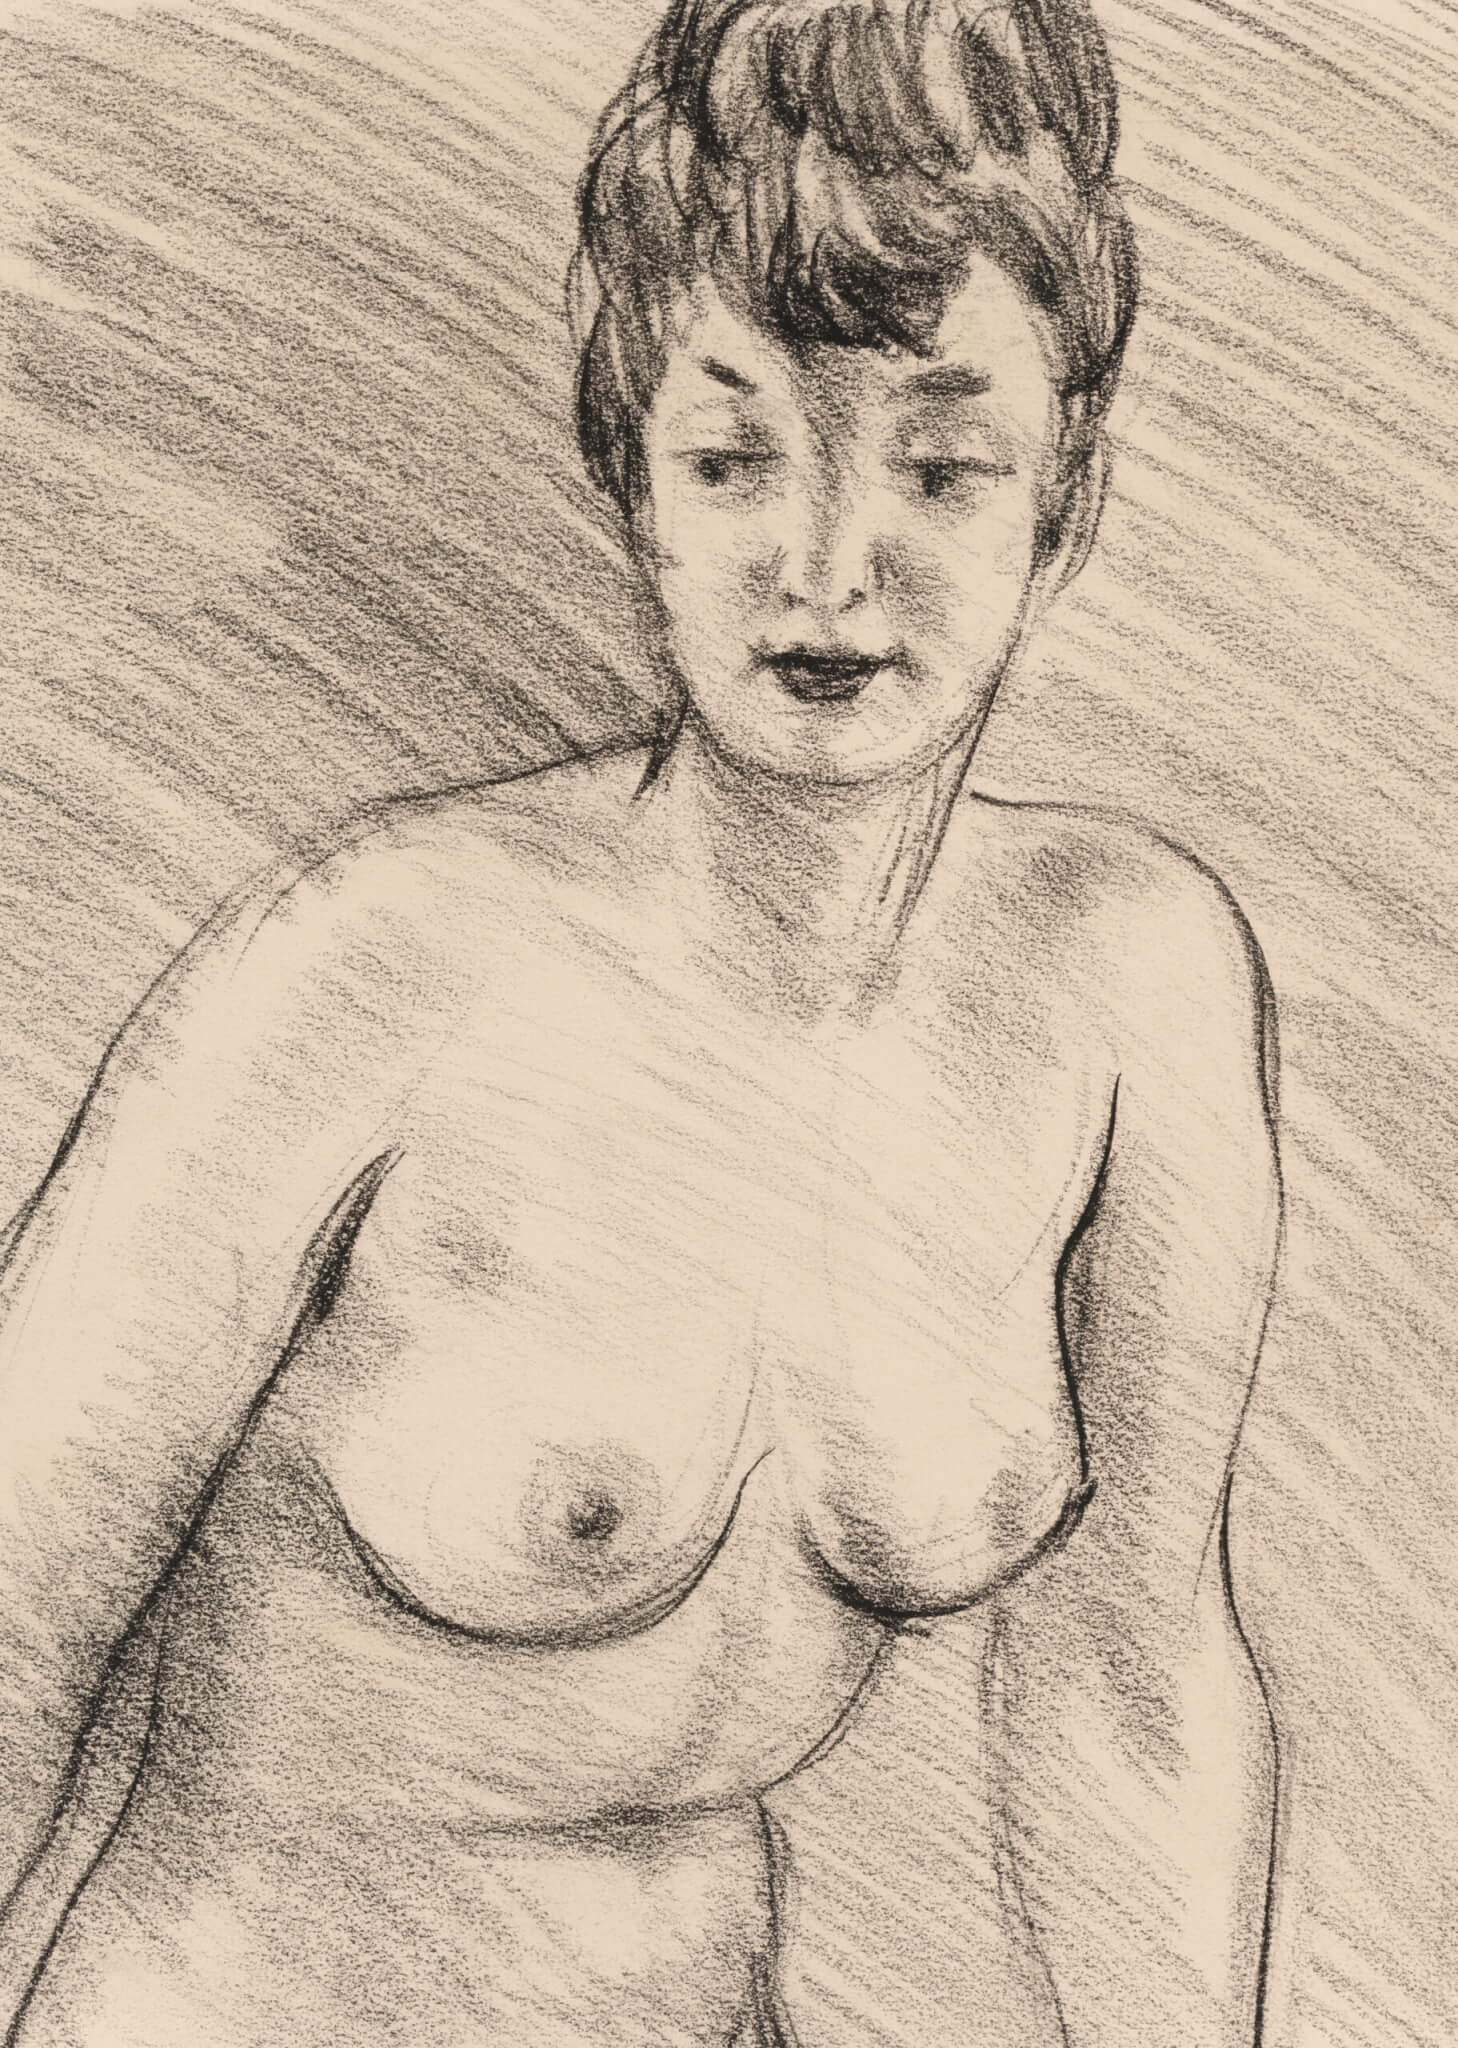 Erich Pehap “Akt”, 1946. 44,3 x 29,3cm